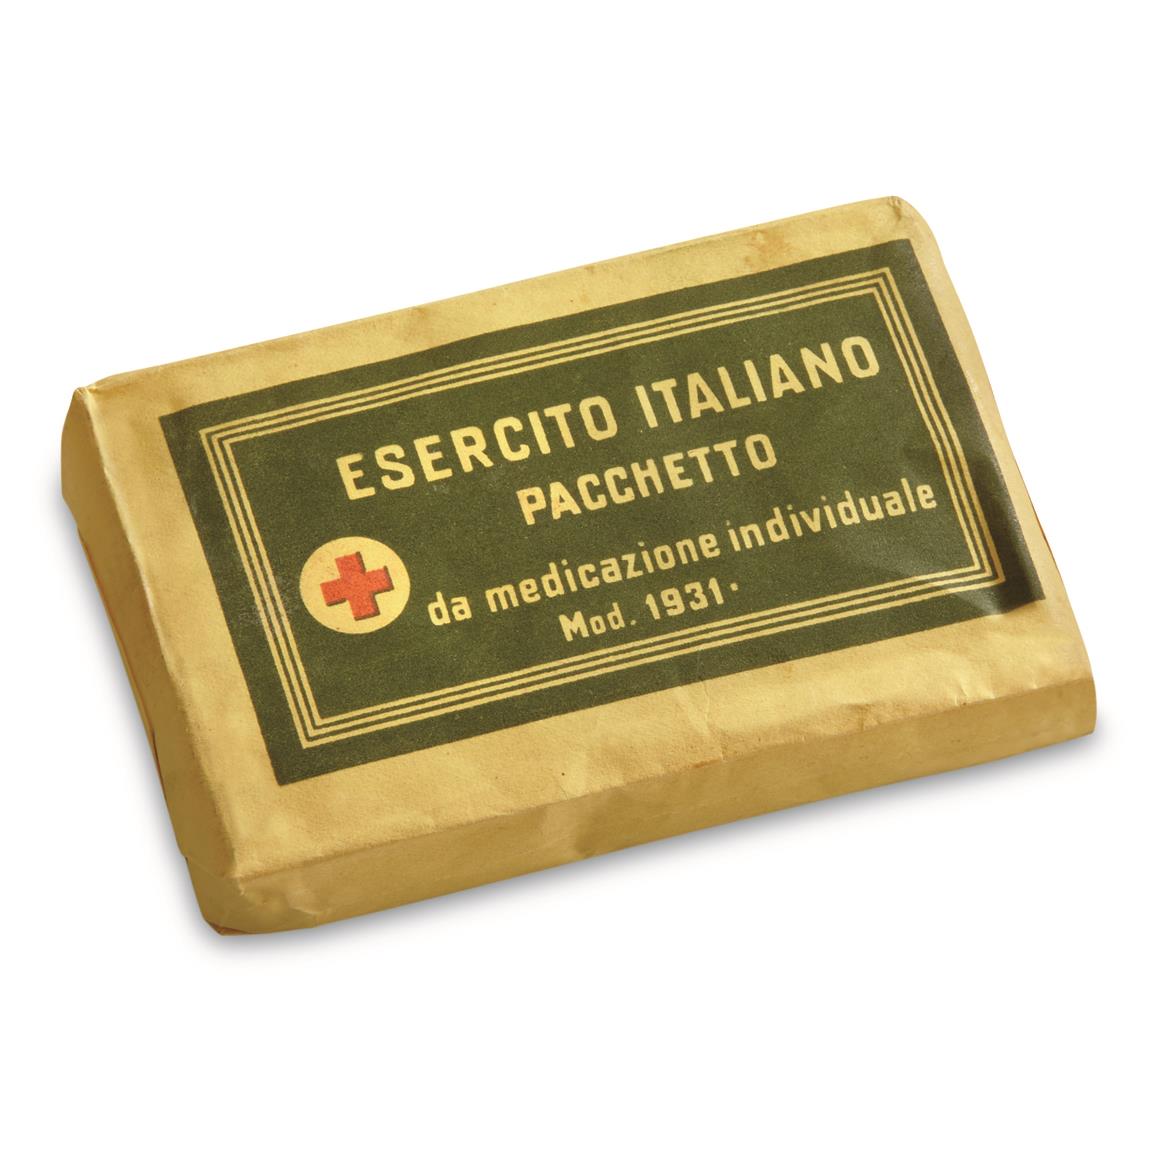 Italian Military Surplus WWII era M31 Bandage Collectible, New